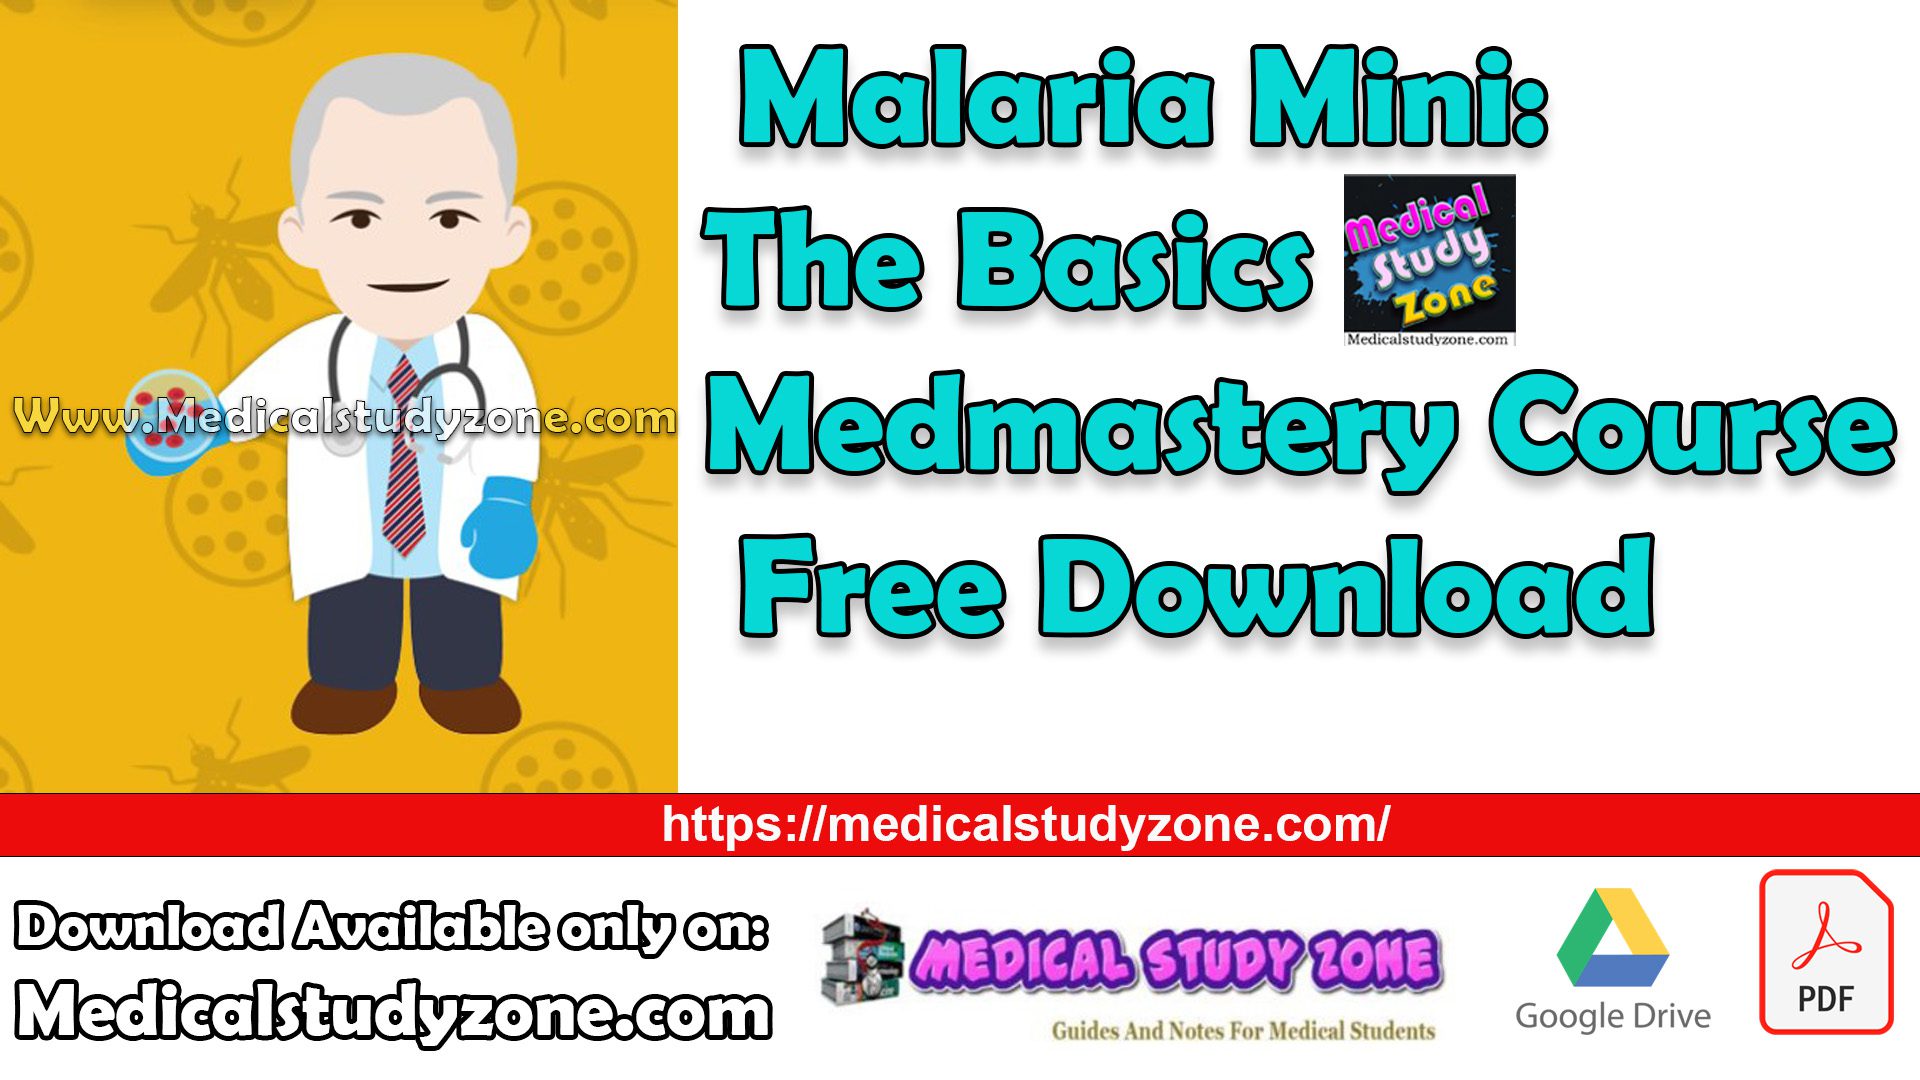 Malaria Mini: The Basics Medmastery Course Free Download